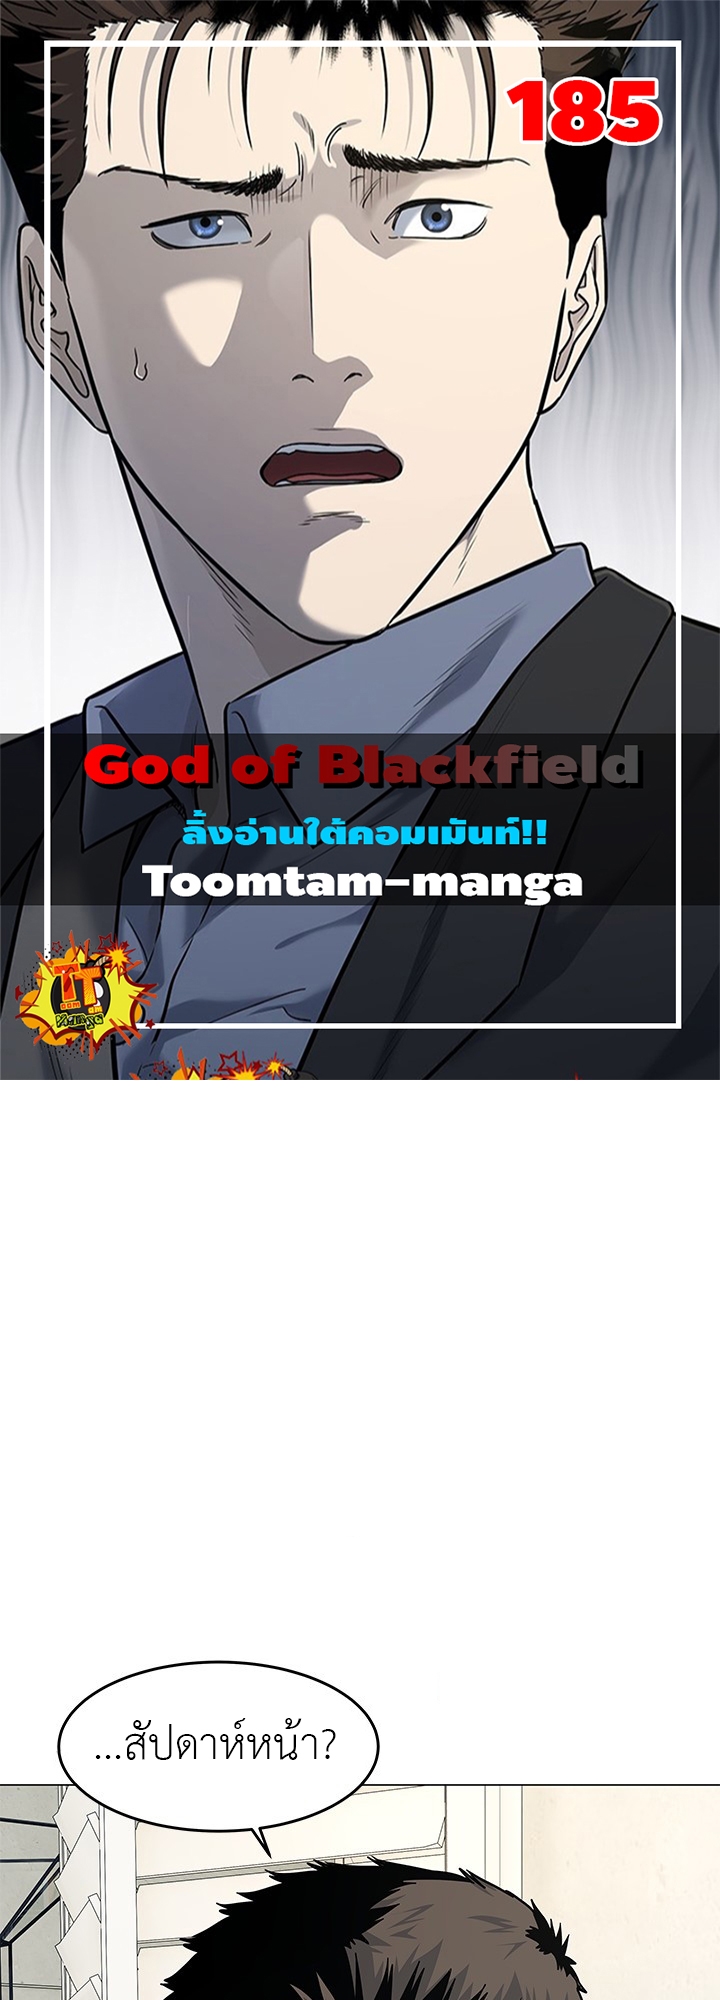 God of Blackfield 185 20 12 25660001